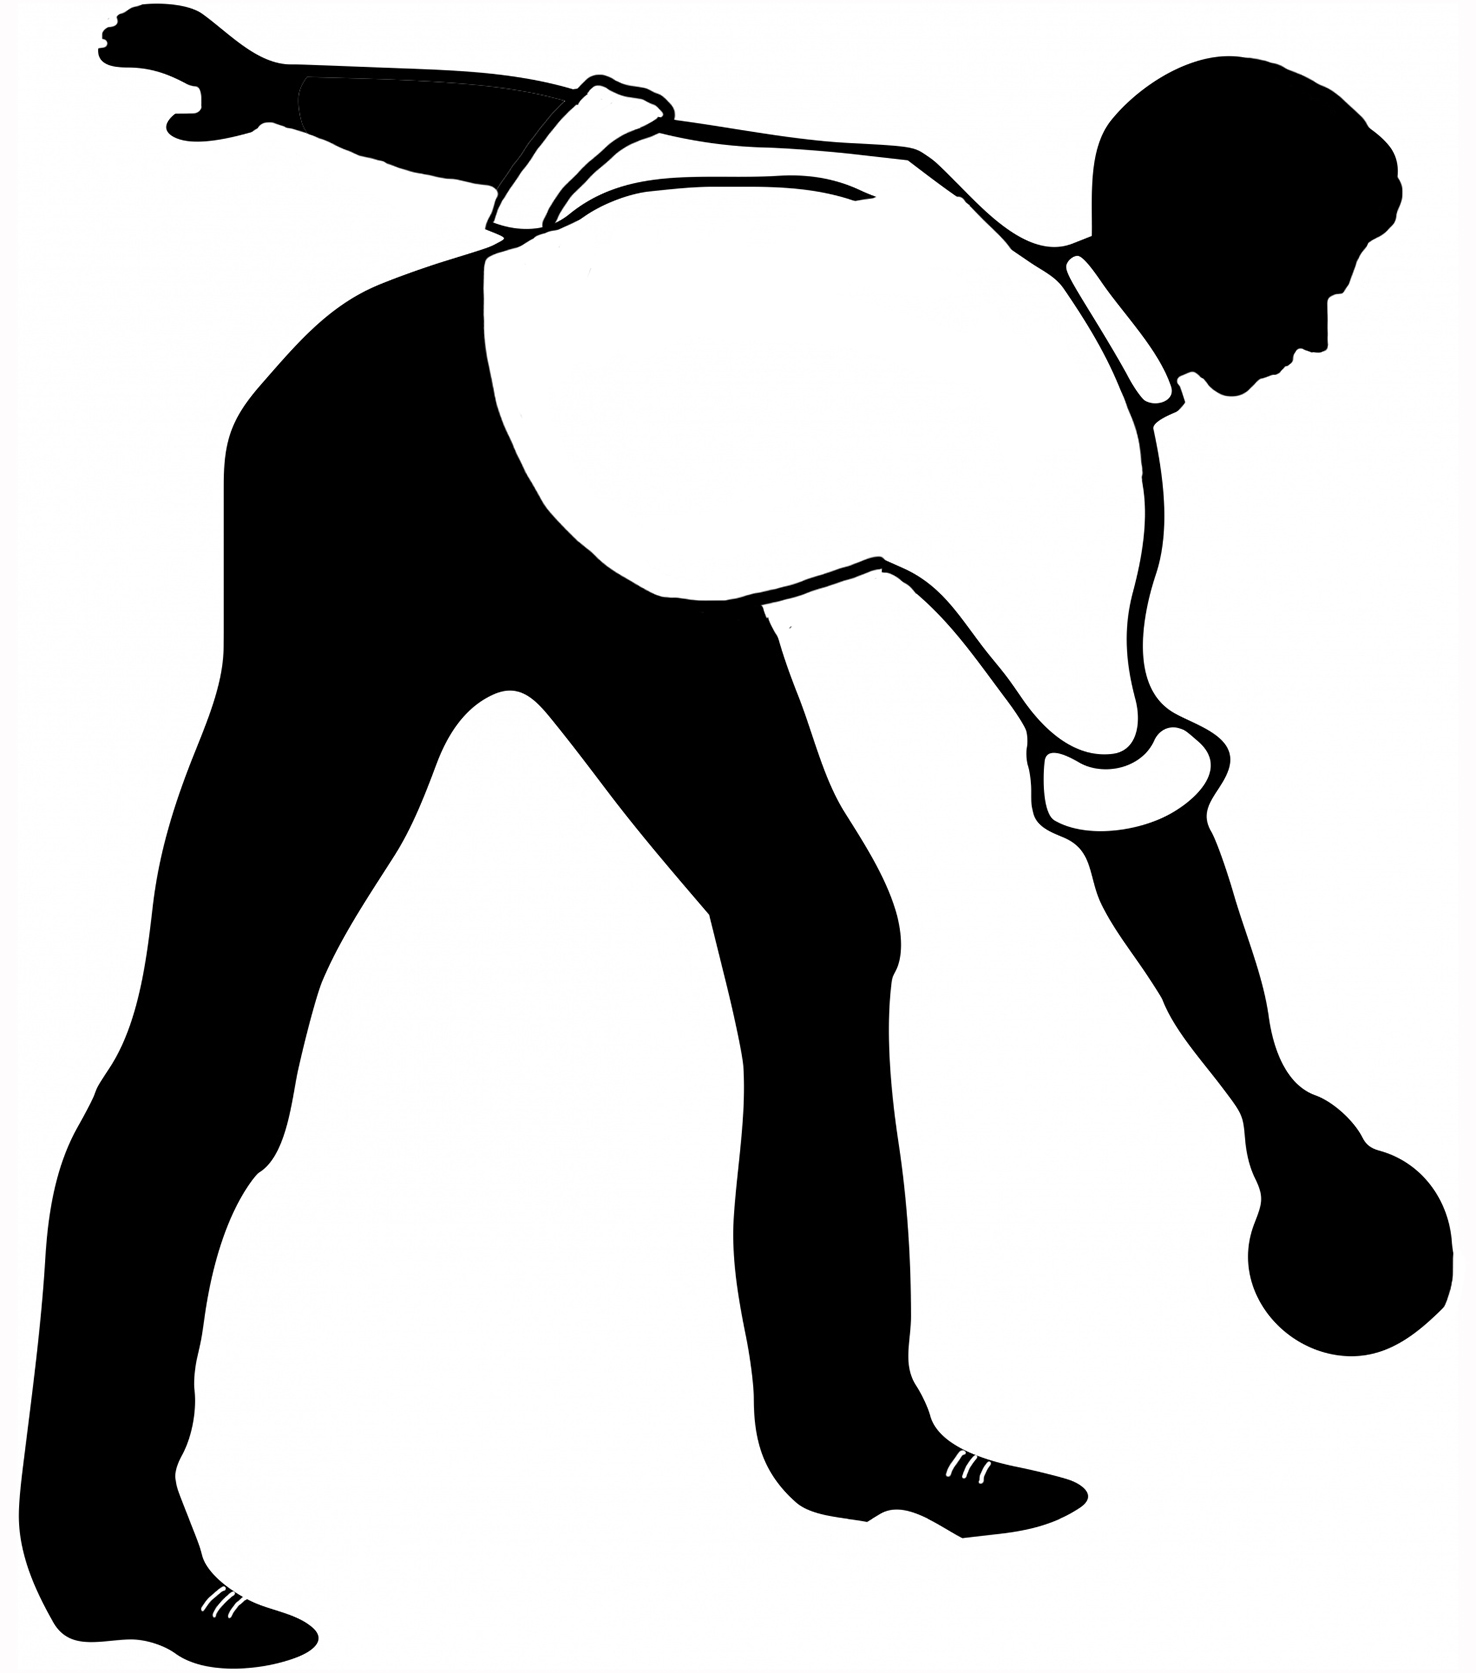 ten bowling silhouette of man